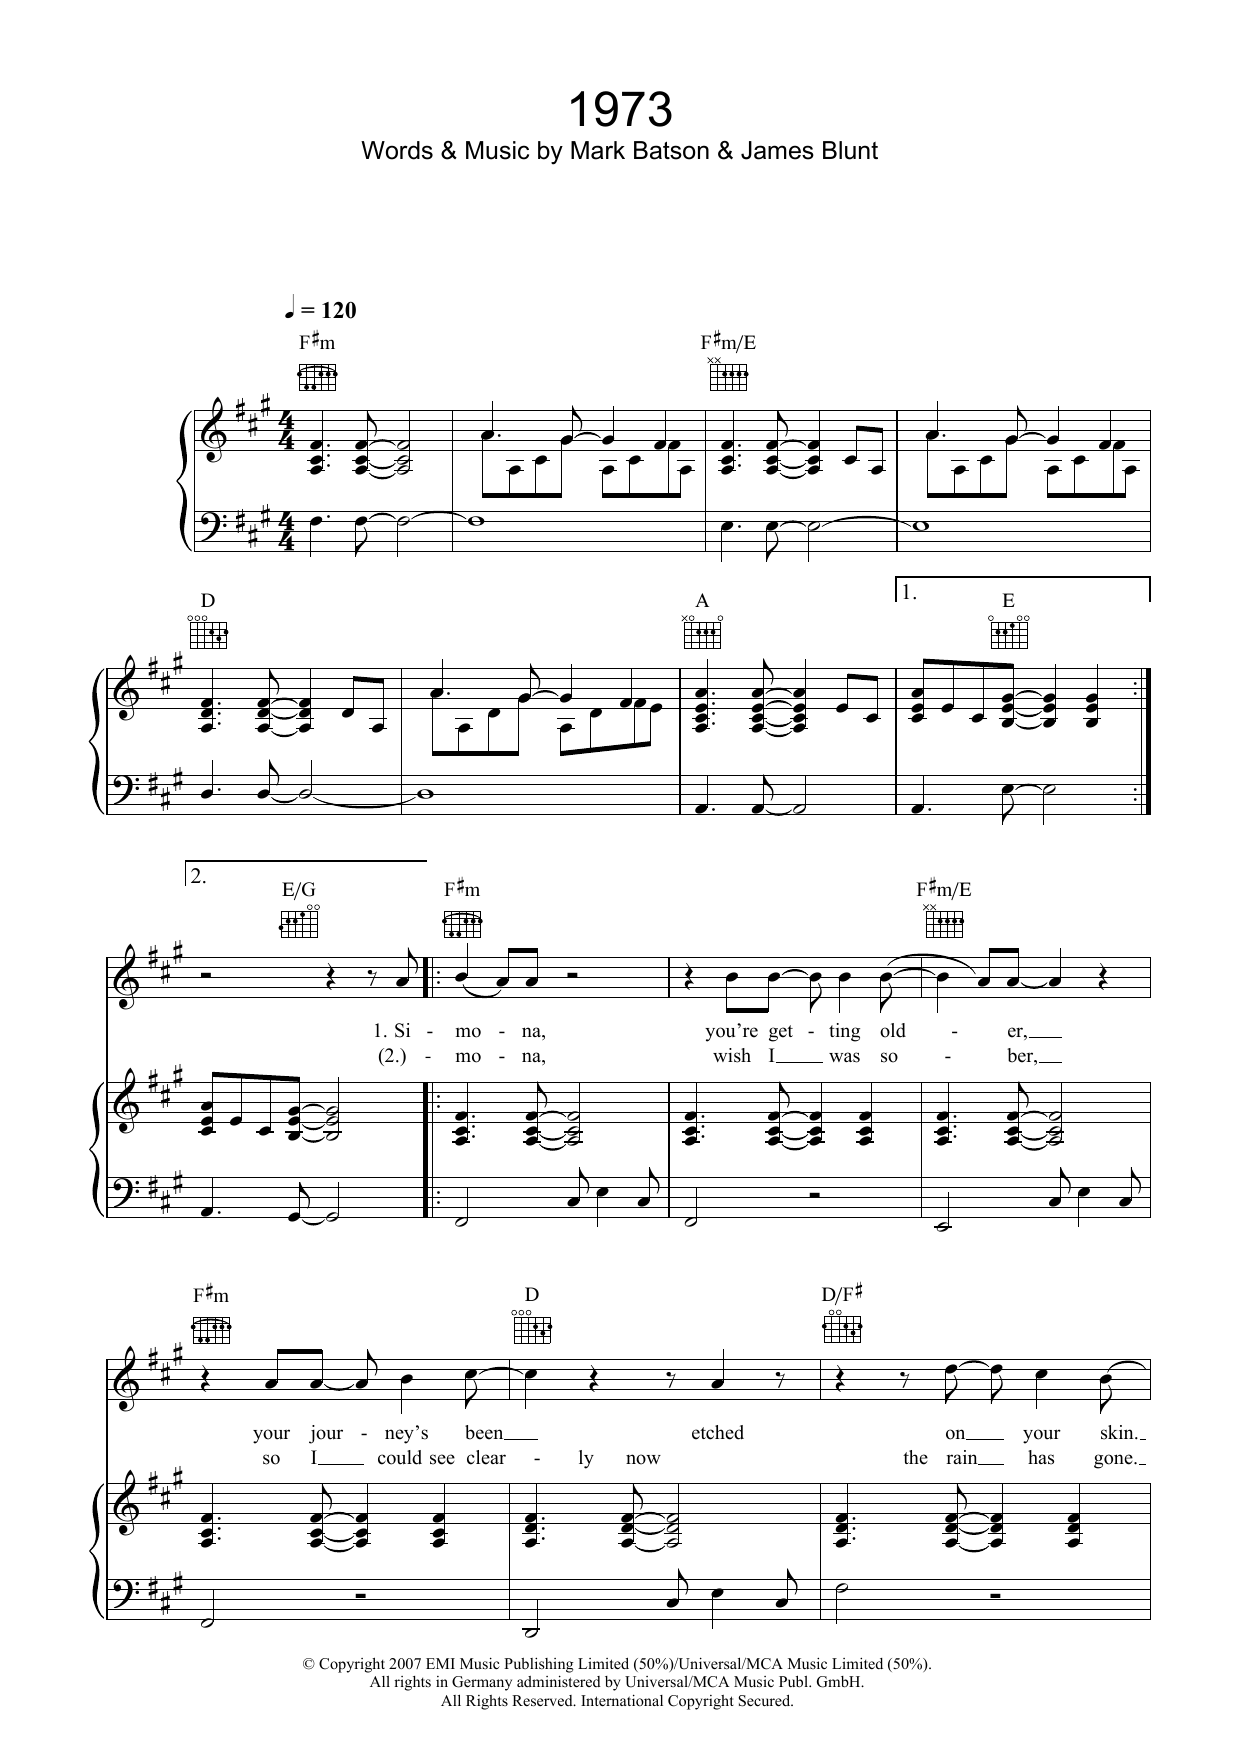 James Blunt 1973 Sheet Music Notes & Chords for Alto Saxophone - Download or Print PDF